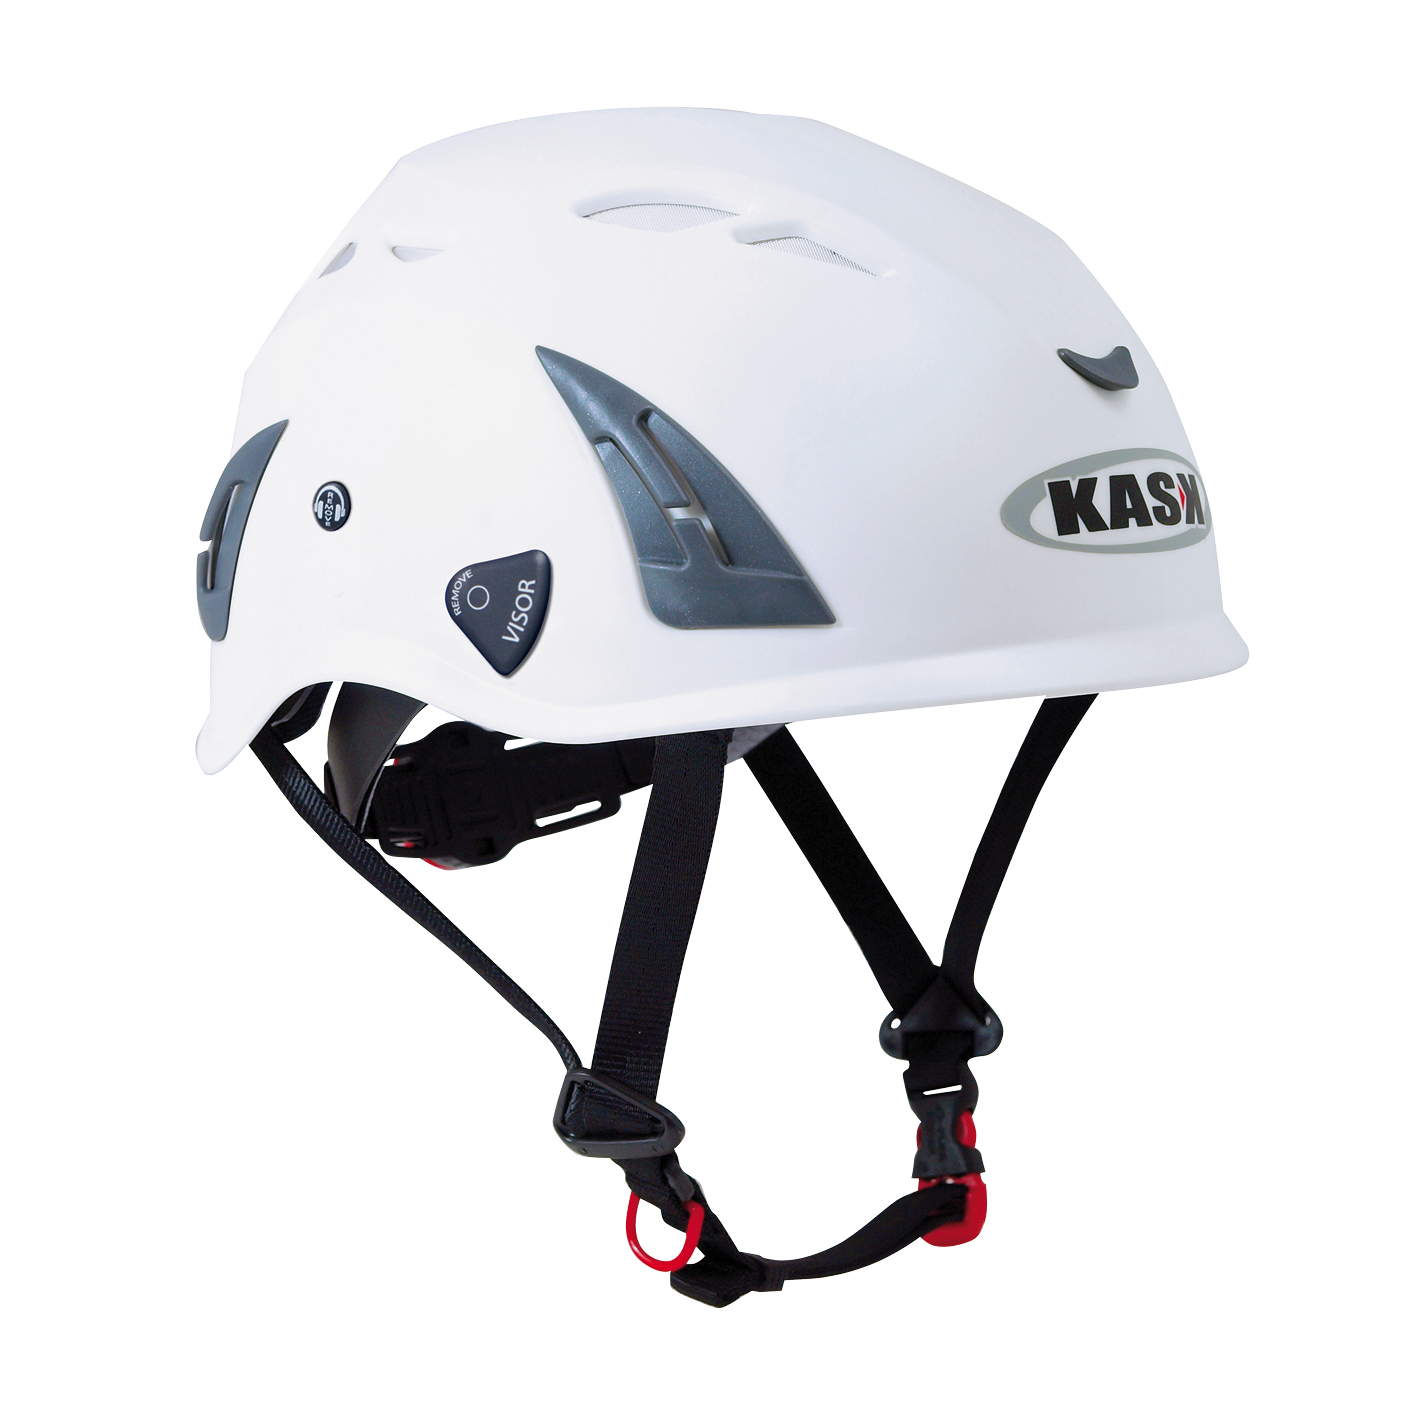 Kask Schutzhelm Plasma AQ, Rigger Helm, Weiß, nach EN397 Norm mit Kinnriemen & Knebelverschluss